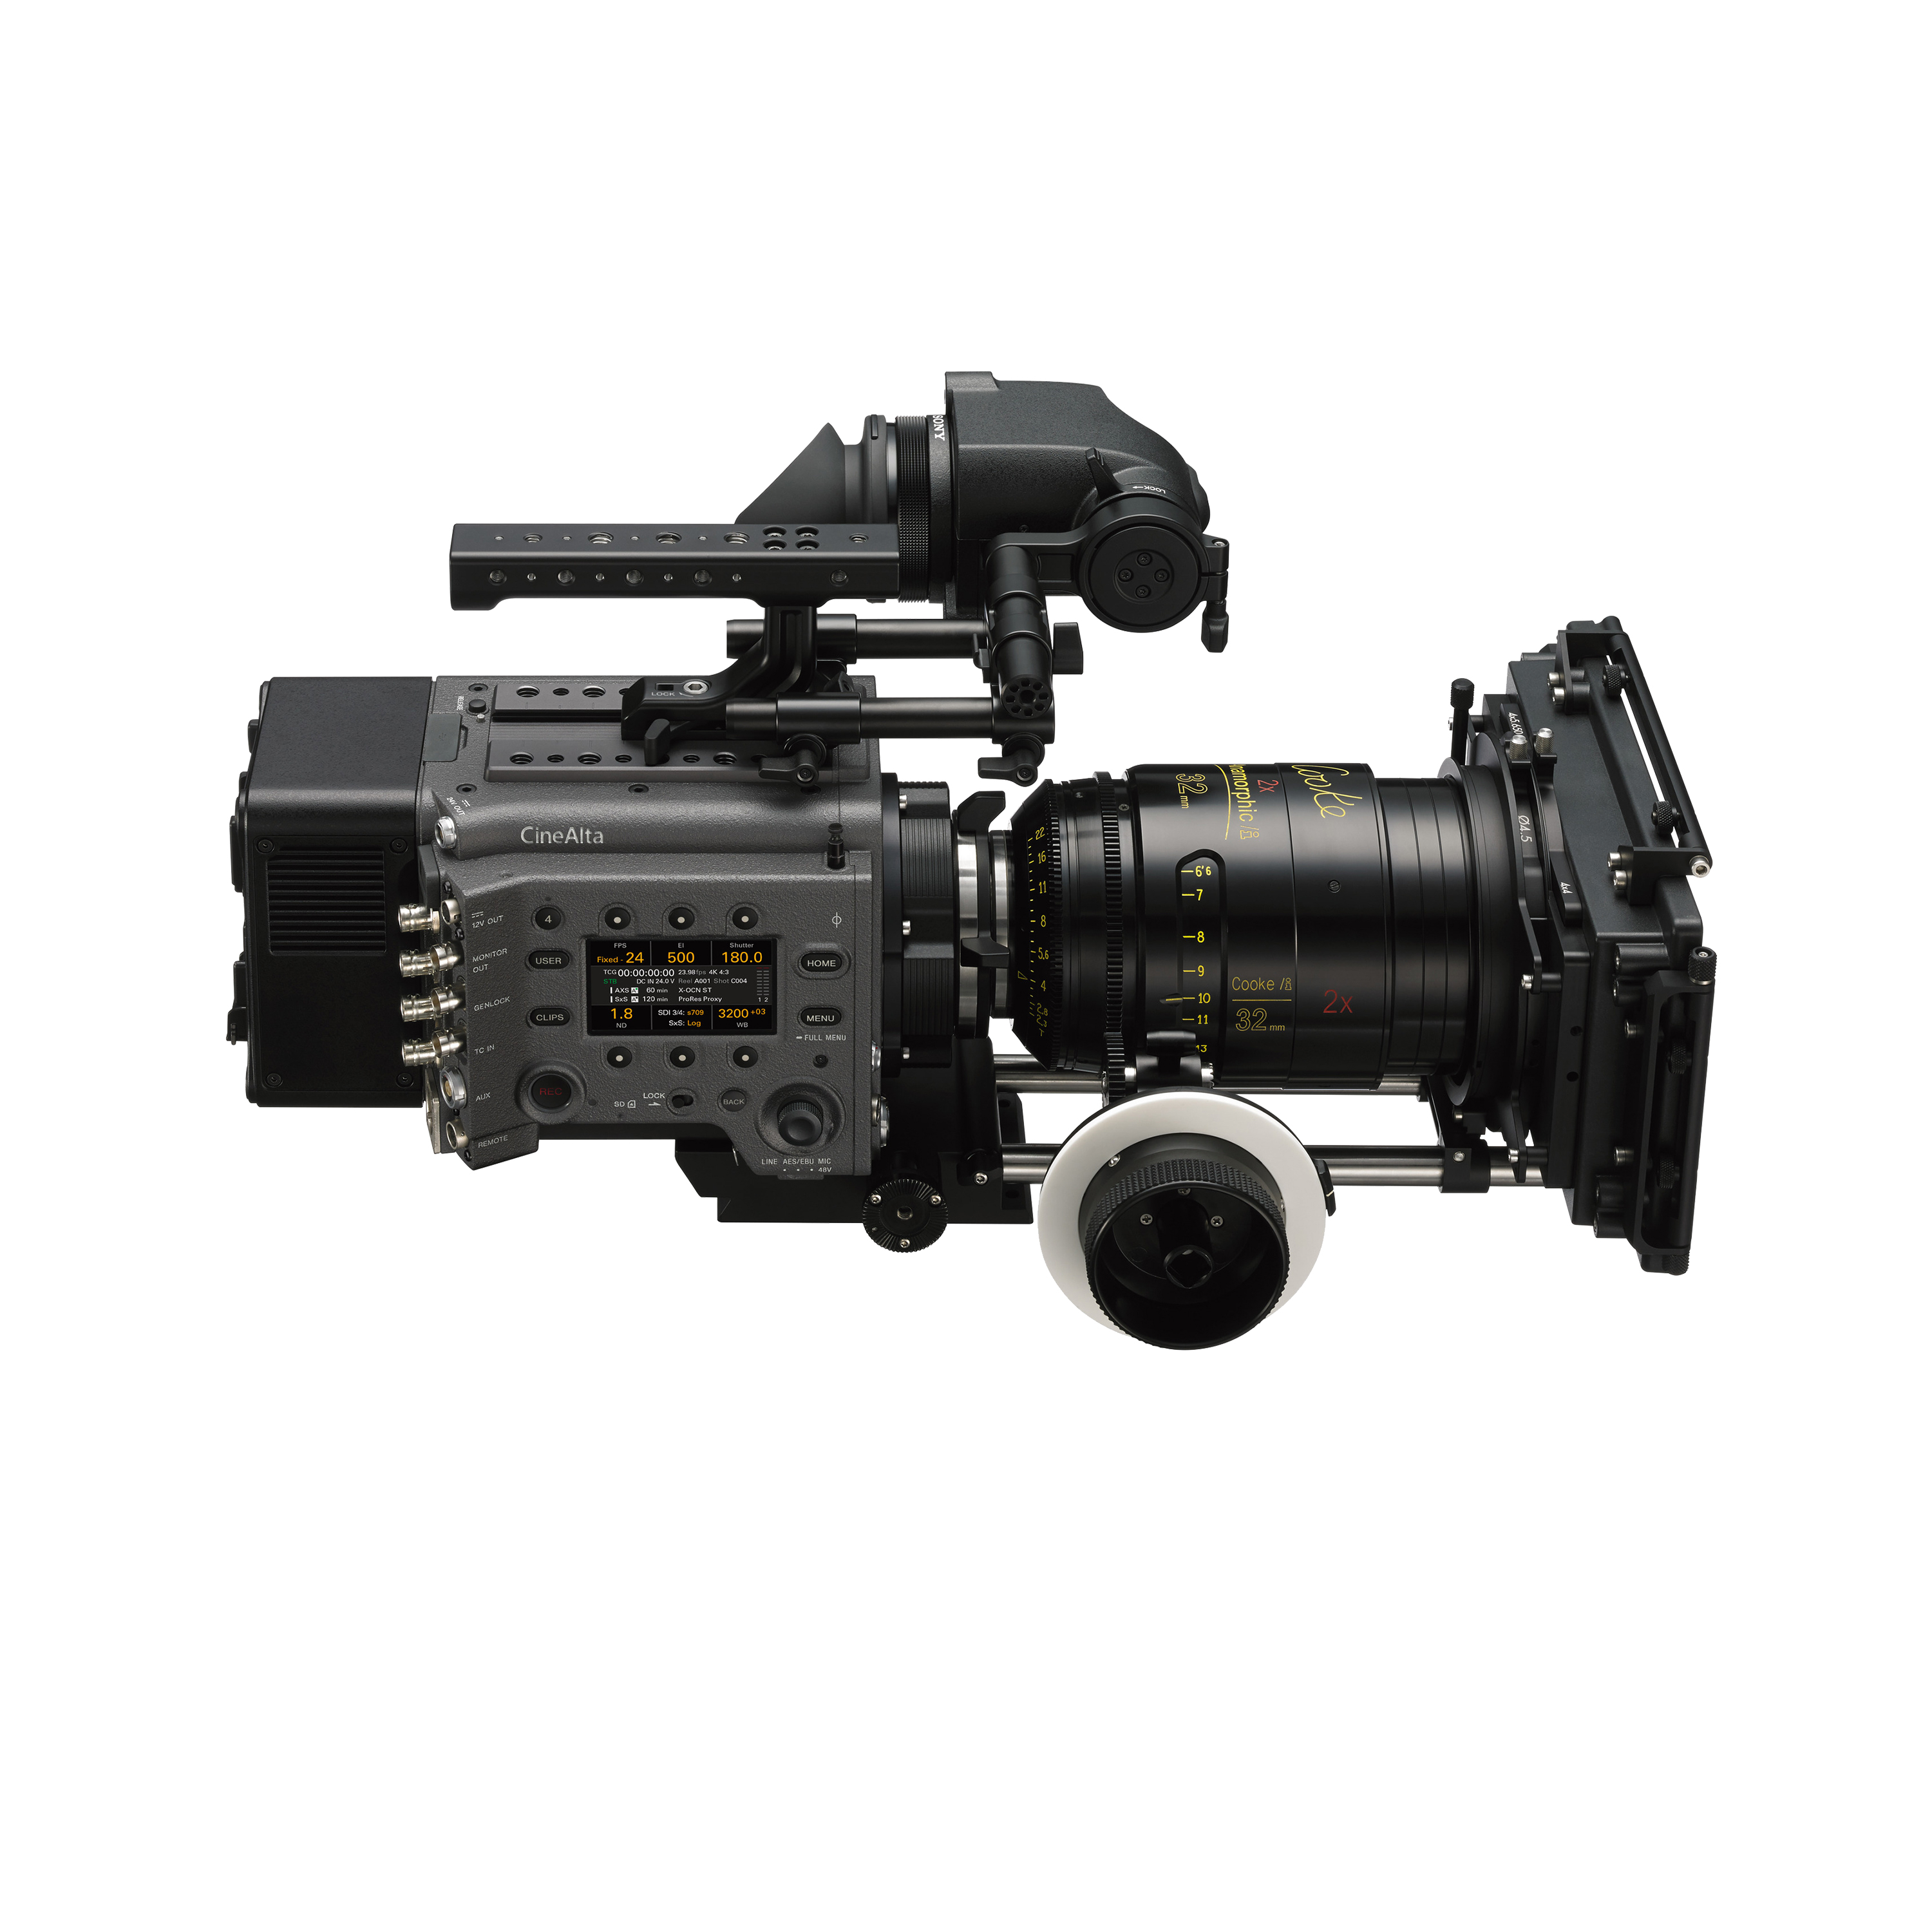 MPC-3610電影攝影機加鏡頭側面圖